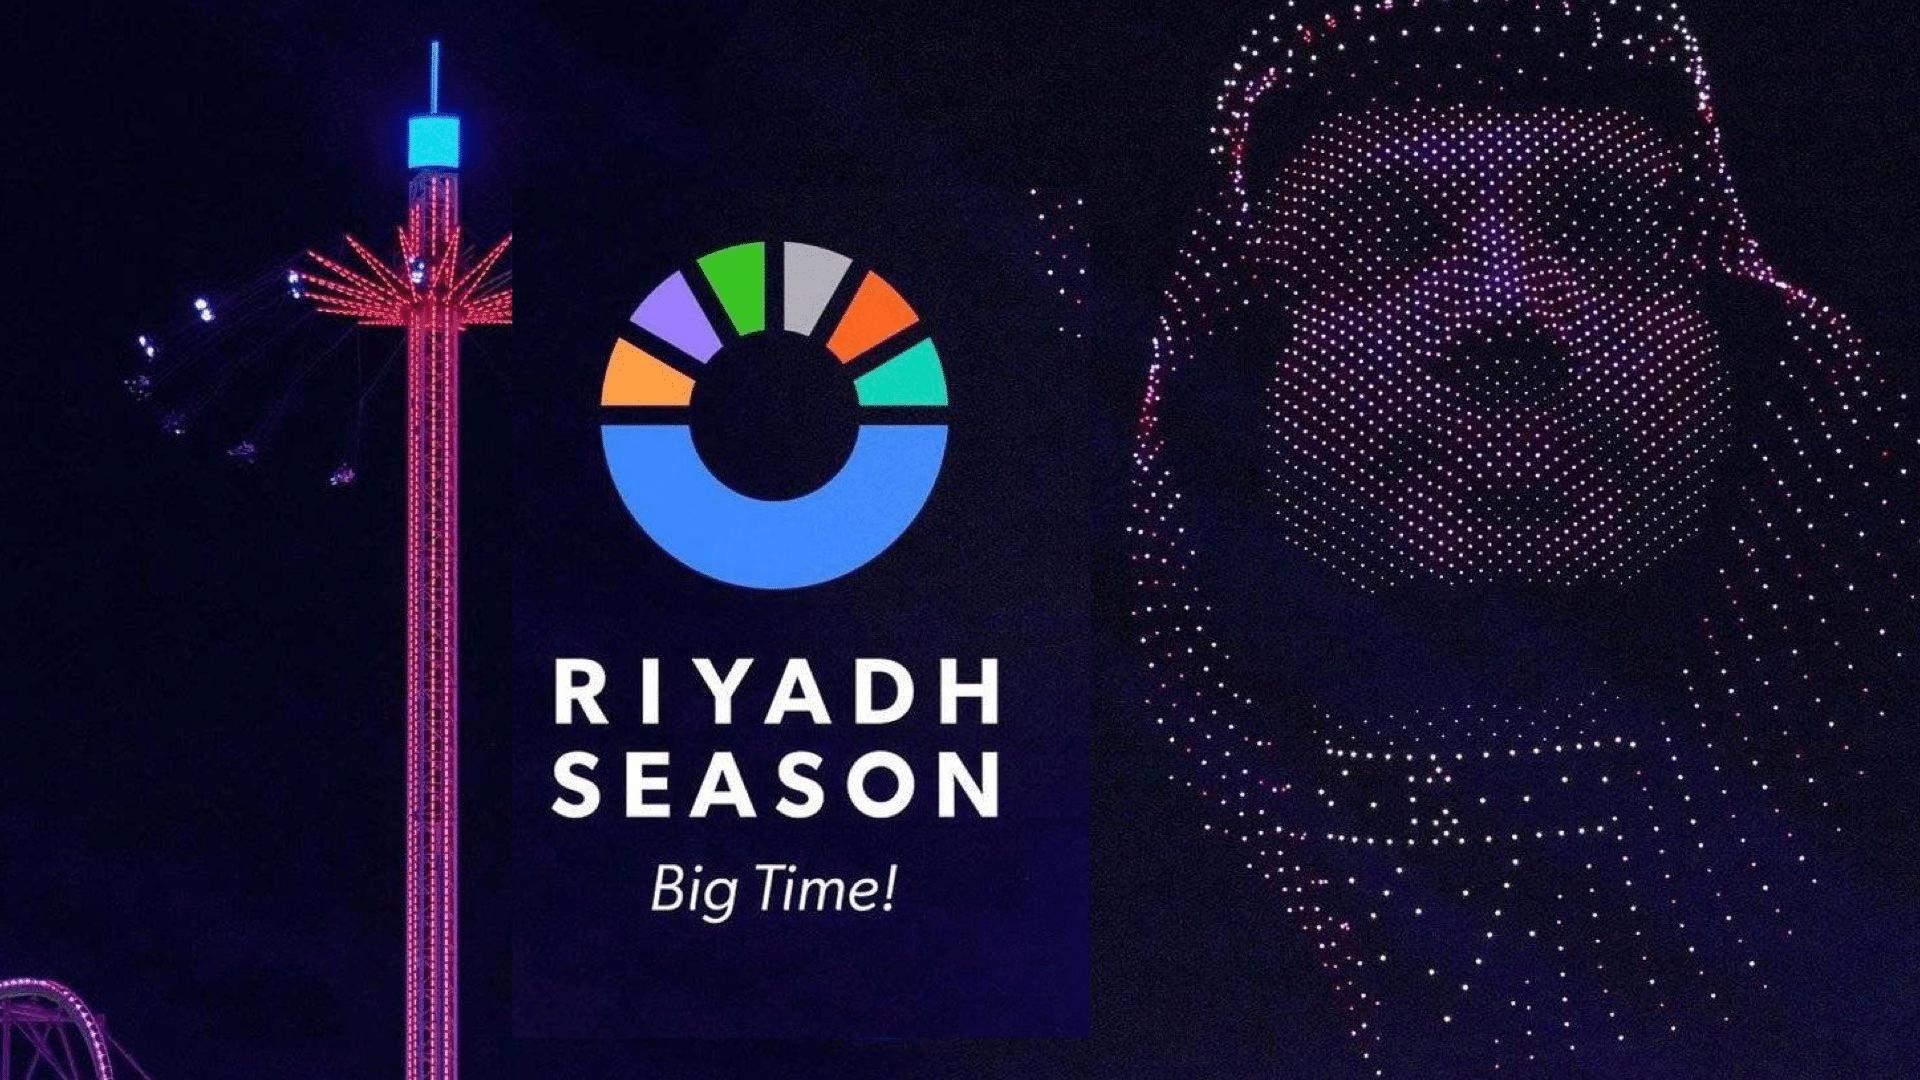 Riyadh Season 2023, Boulevard City, Boulevard World, Boulevard Hall, Food Truck Park, Al Murabaa, VIA Riyadh, Wonder Garden